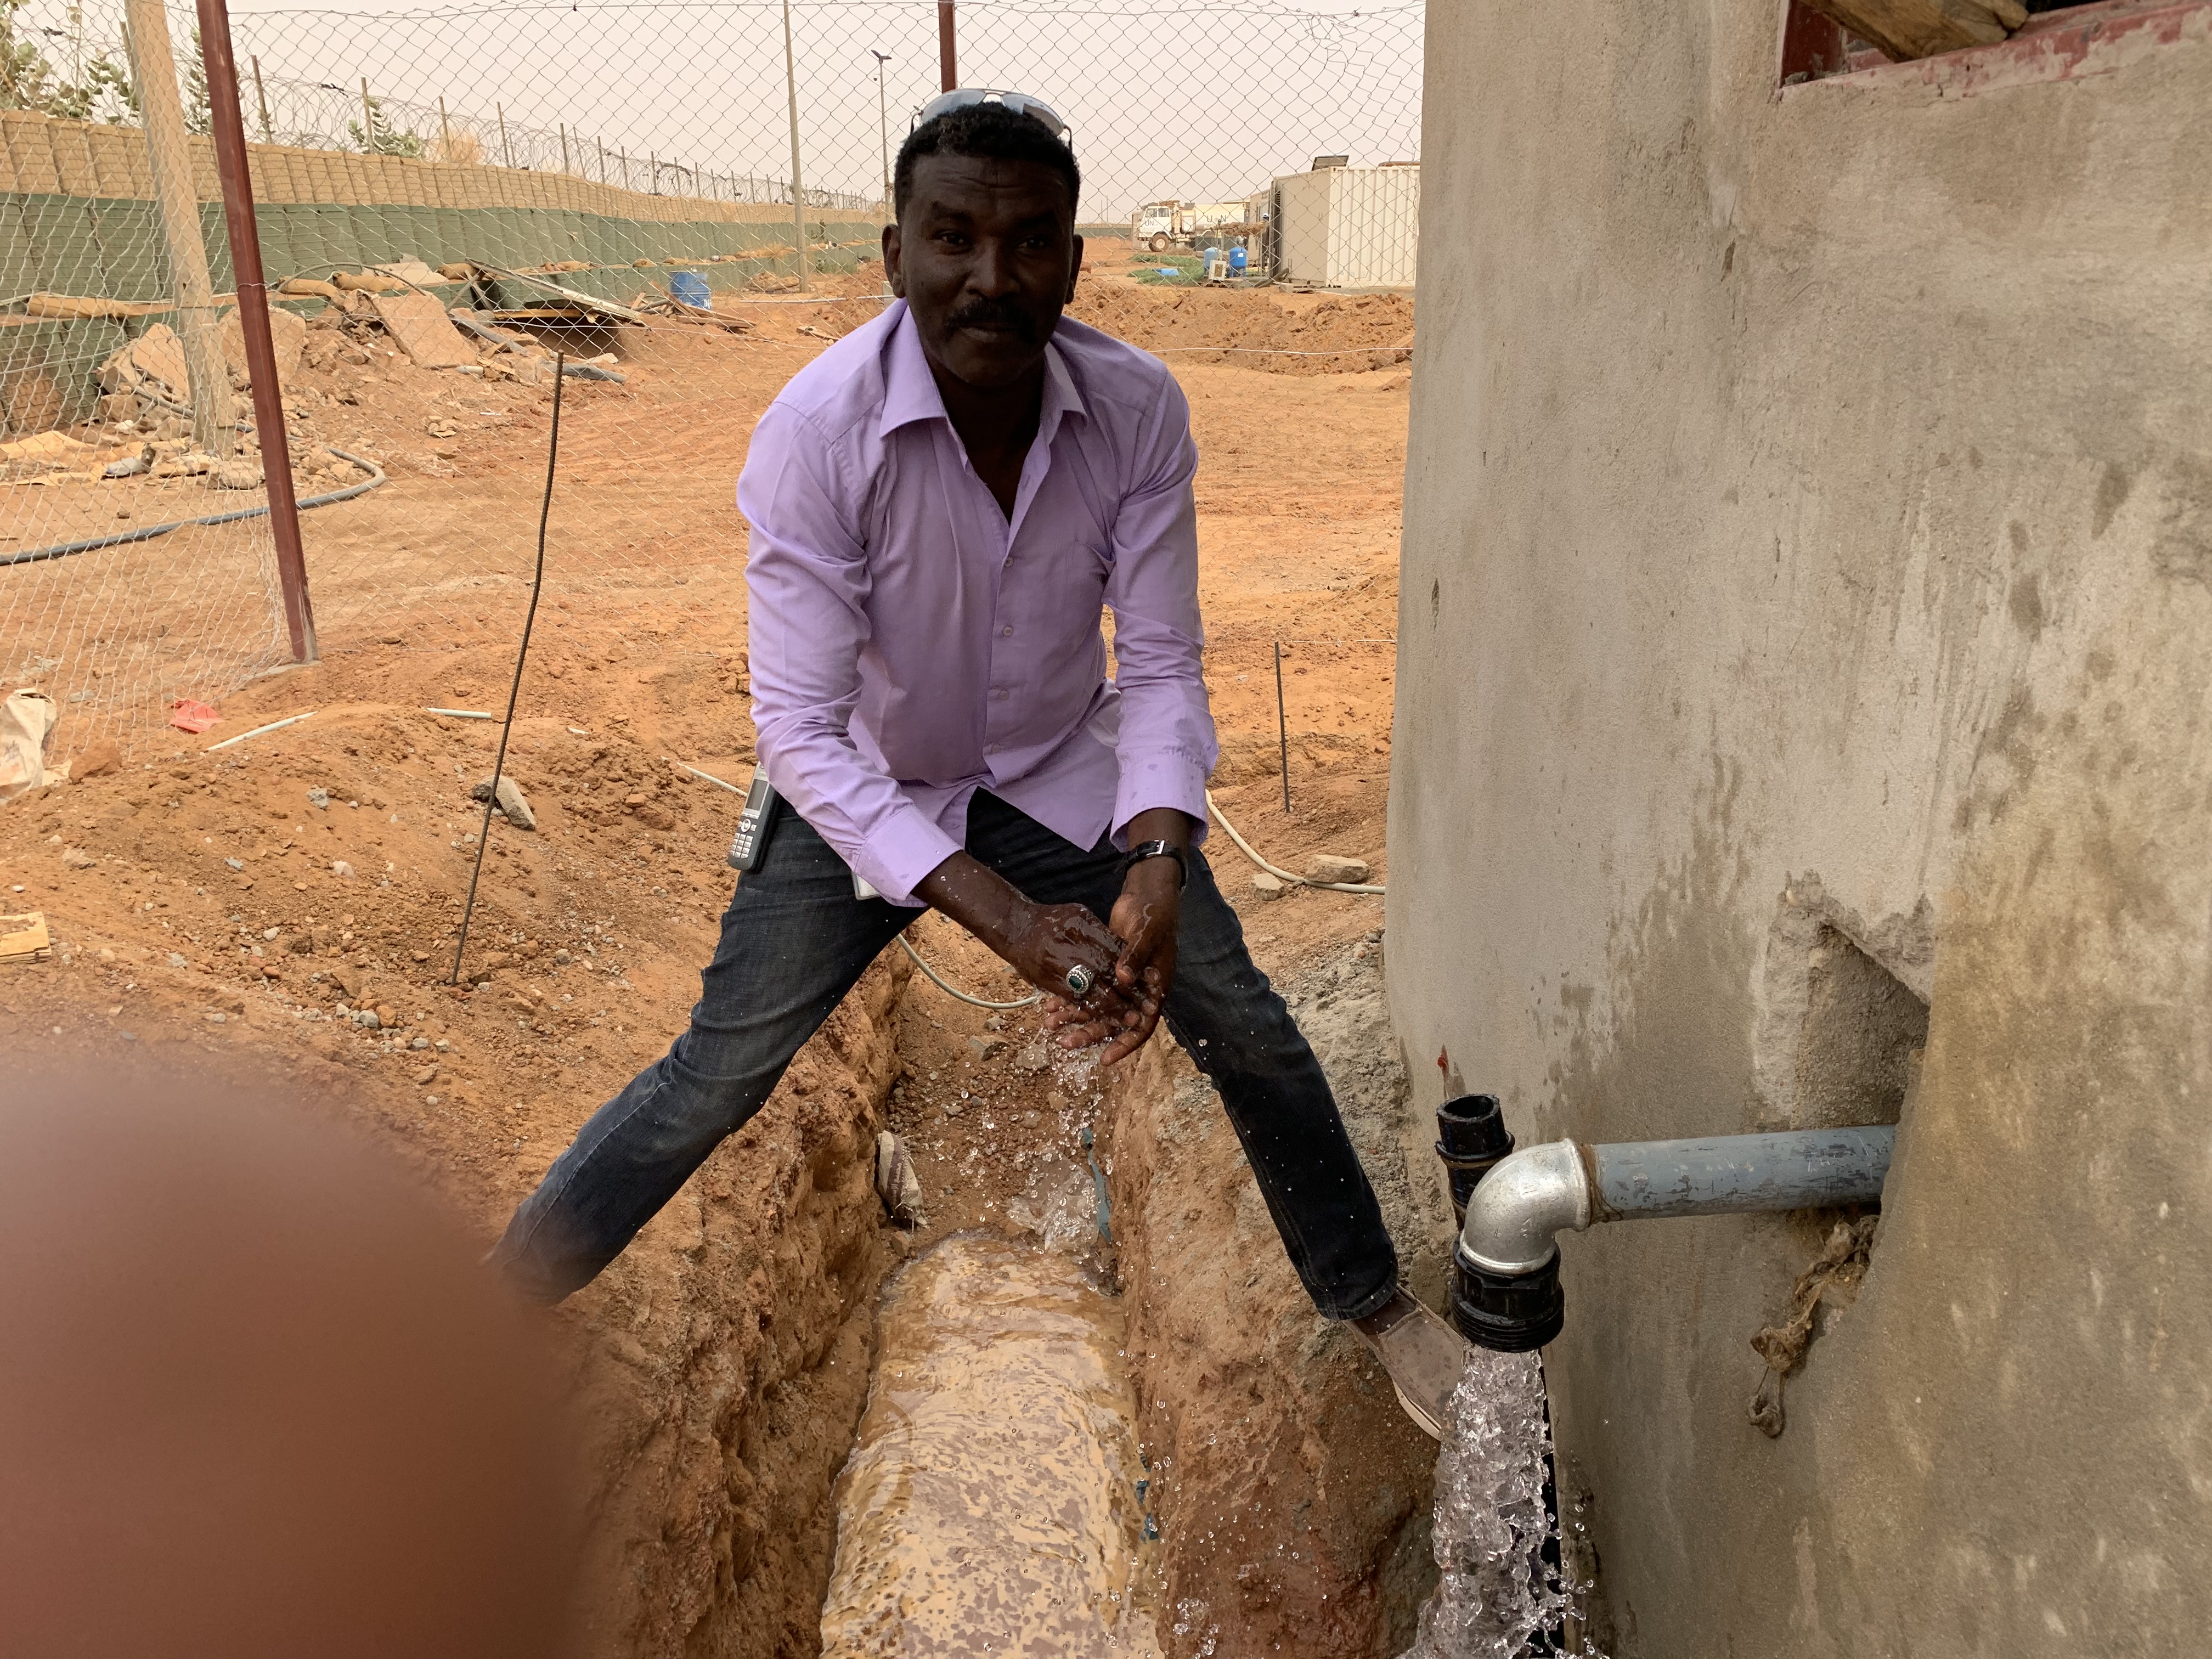 Ibrahim Ibrahim, Water and Sanitation Engineer at MINUSMA